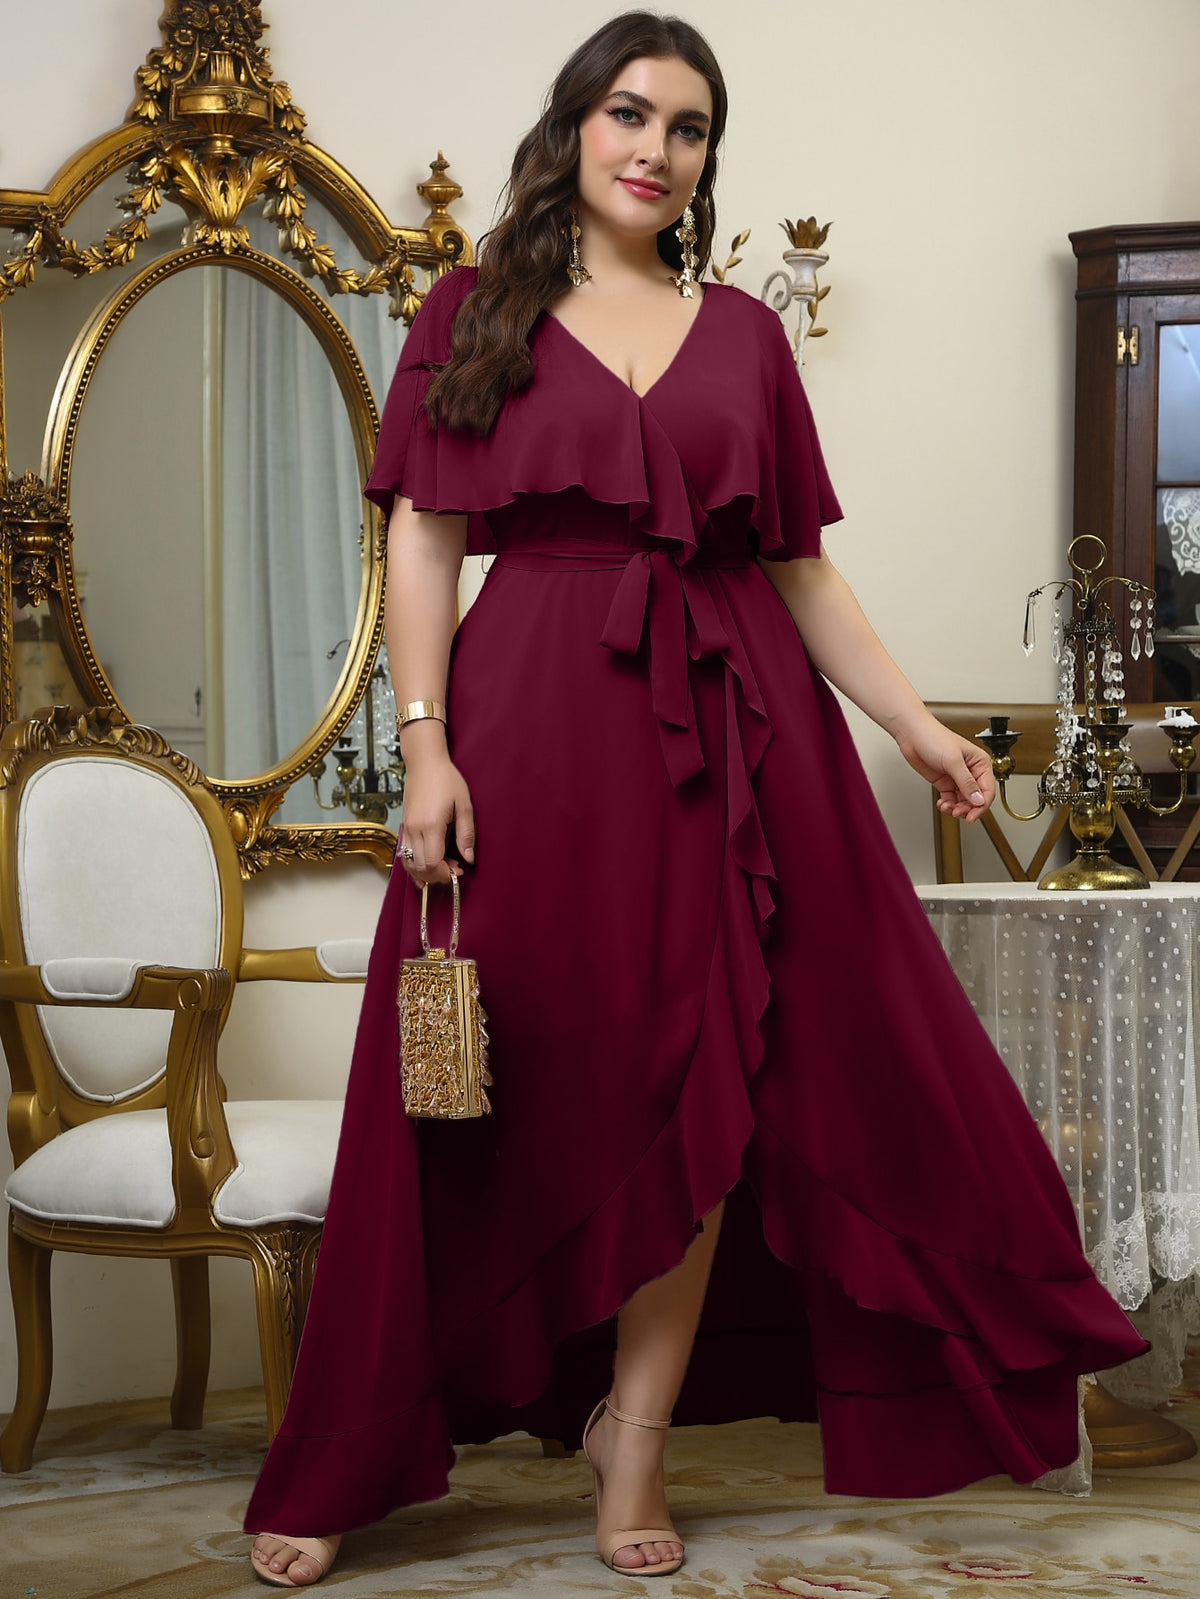 4XL] SHEIN CURVE - Burgundy Chiffon Dress, Women's Fashion